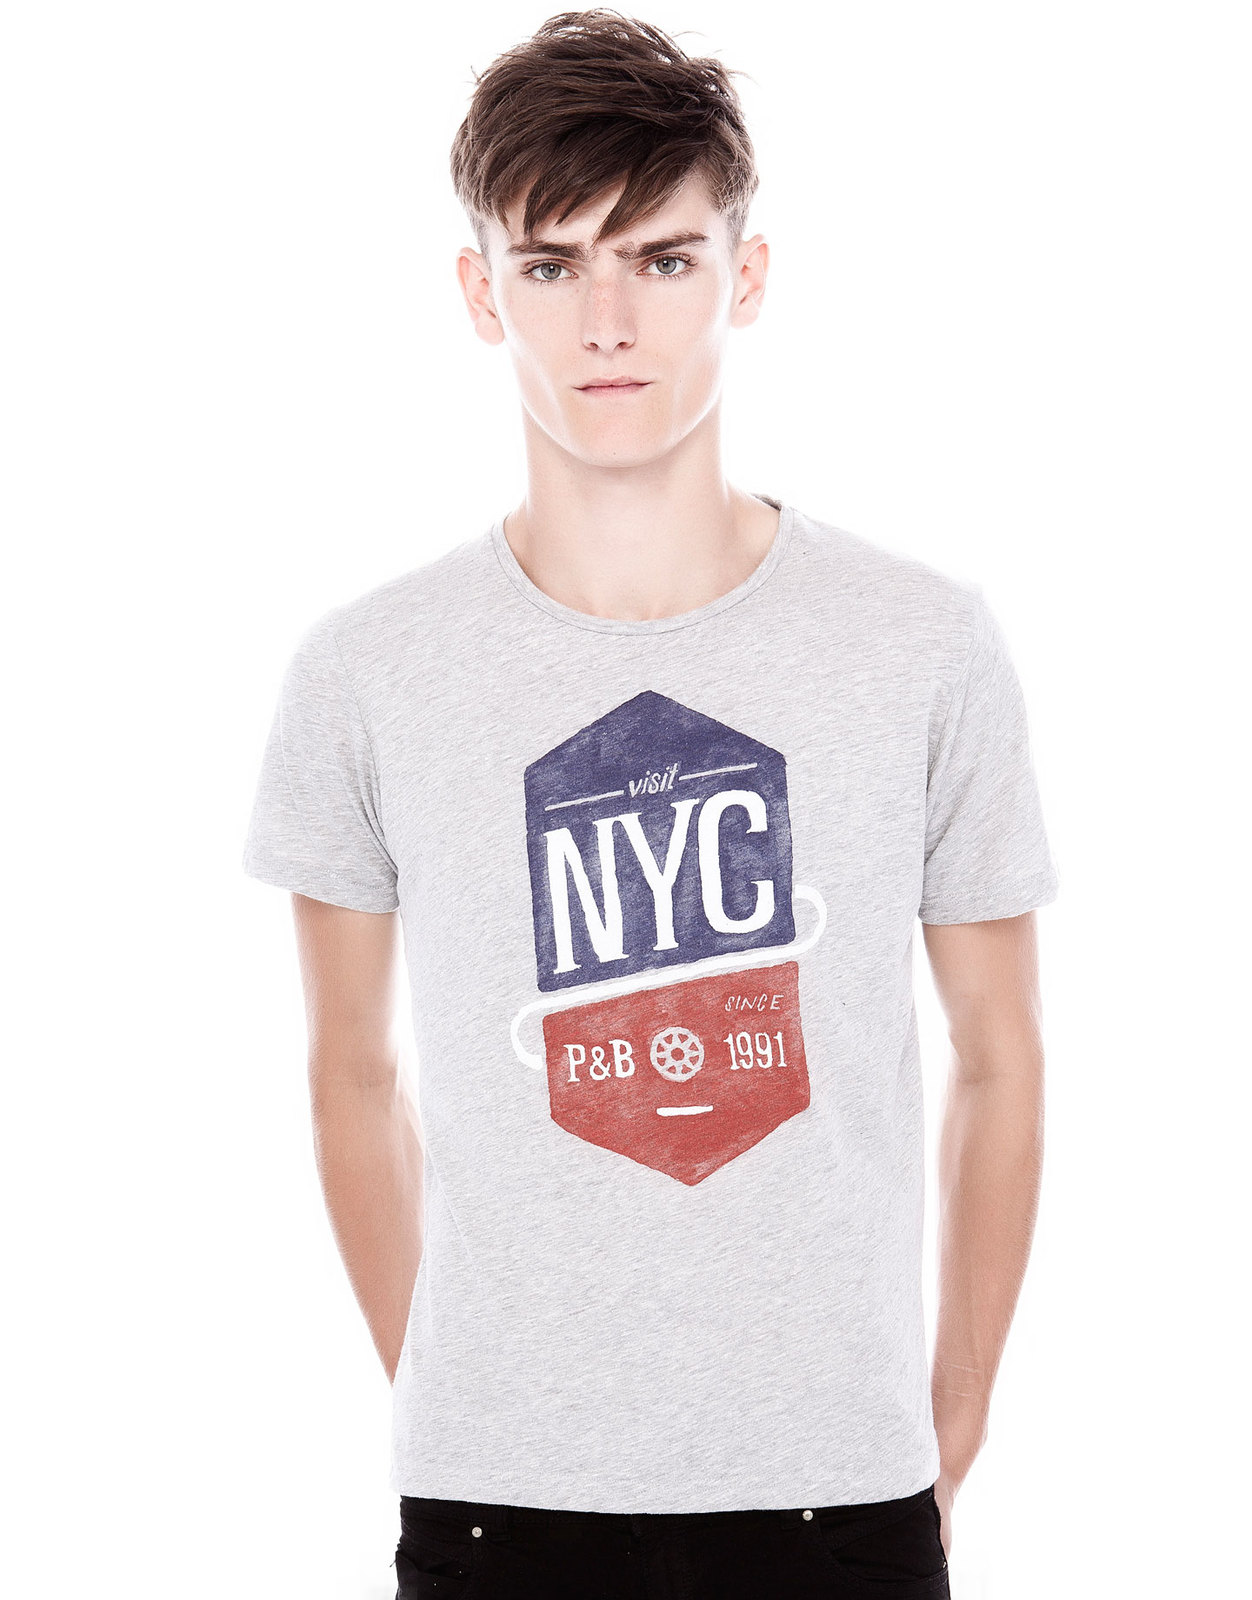 Pull and Bear NYC T-shirt 2013.11.2 fotója